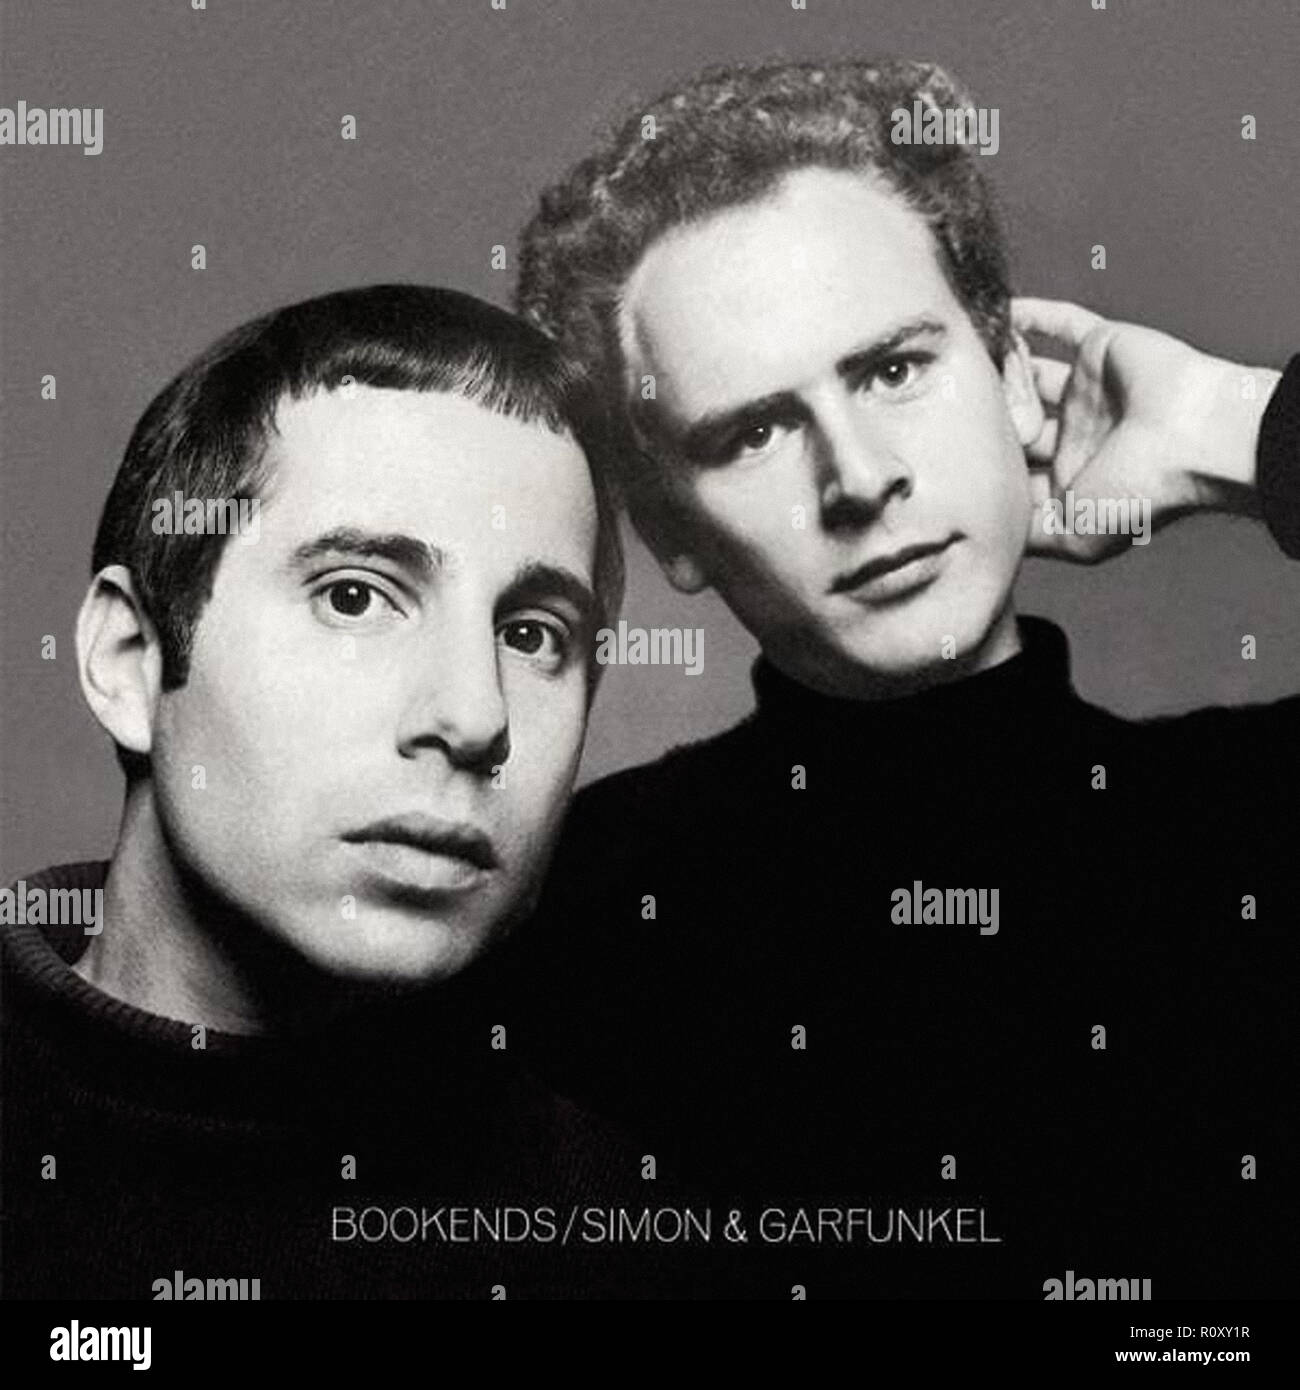 BOOKENDS - SIMON & GARFUNKEL - Vintage cover album Stock Photo - Alamy